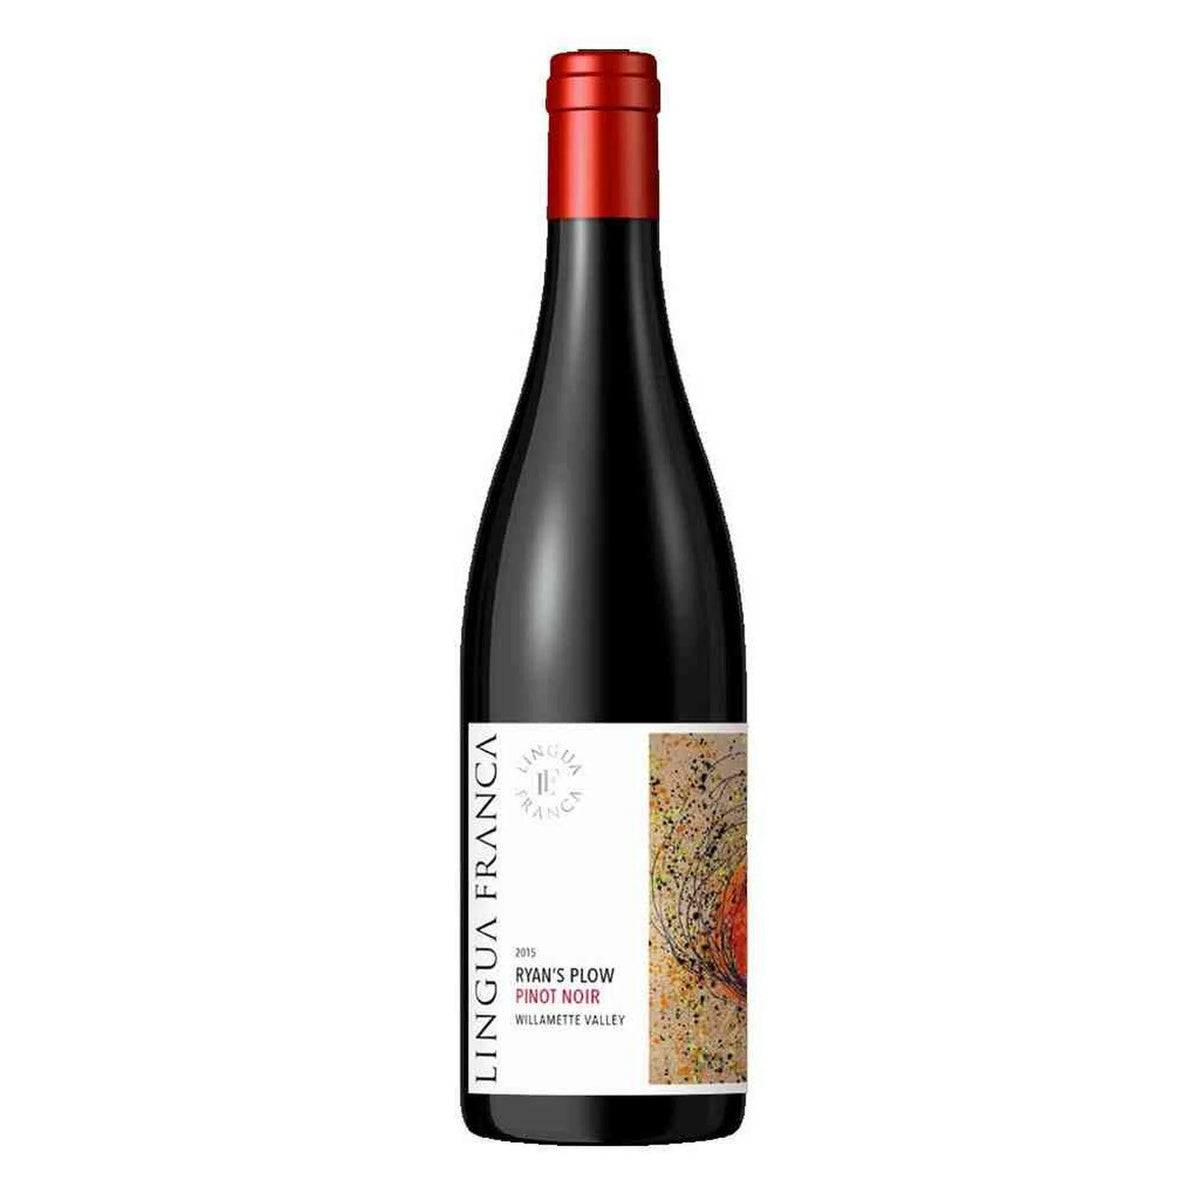 Lingua Franca-Rotwein-Pinot Noir-2015 Ryan’s Plow Pinot Noir-WINECOM